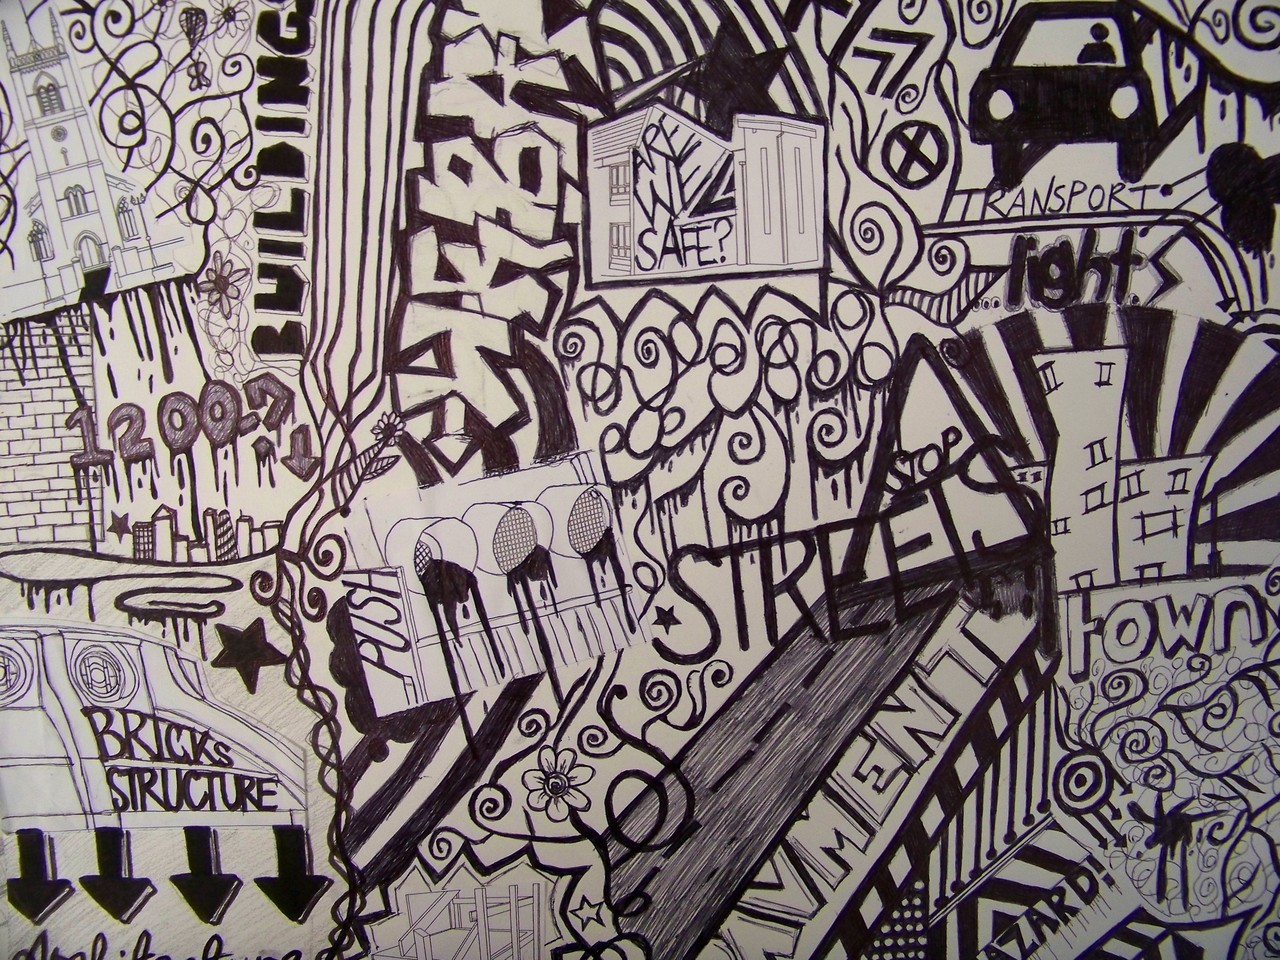 another exam piece using doodles follow me here http://emmalorkin.tumblr.com/